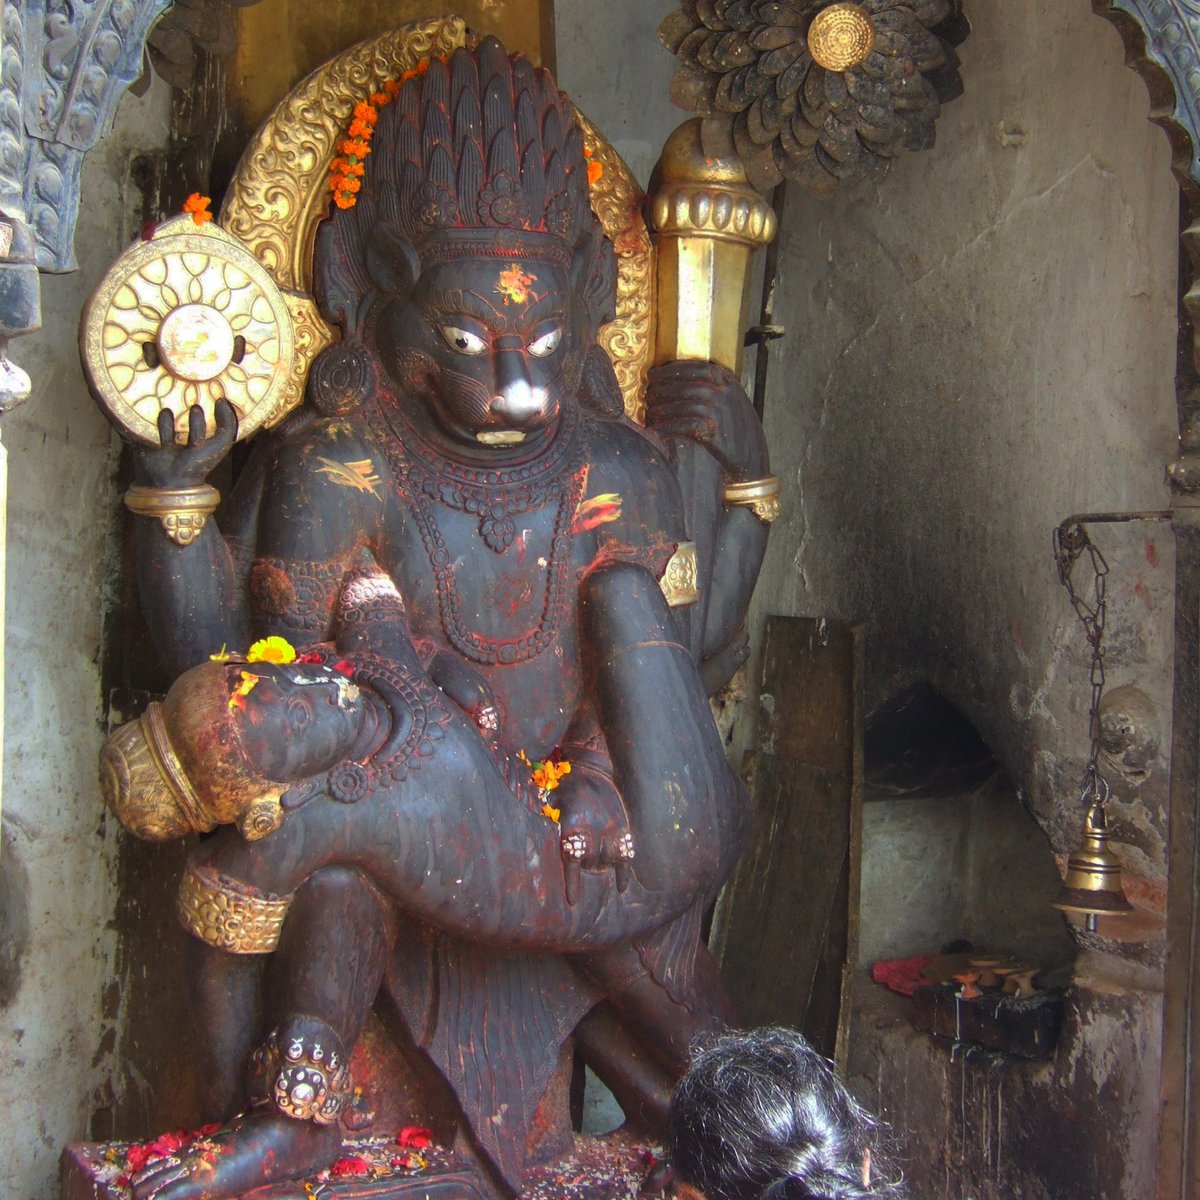 Narasimha Jayanti and the statue of Lord Ugra Narasimha killing the demon Hiranyakashipu in Kathmandu, Nepal 🦁 

Narasimha Jayanti celebrates the birthday of Lord Narasimha, the fourth avatar of the Hindu god Bishnu.

Photo: Clemensmarabu